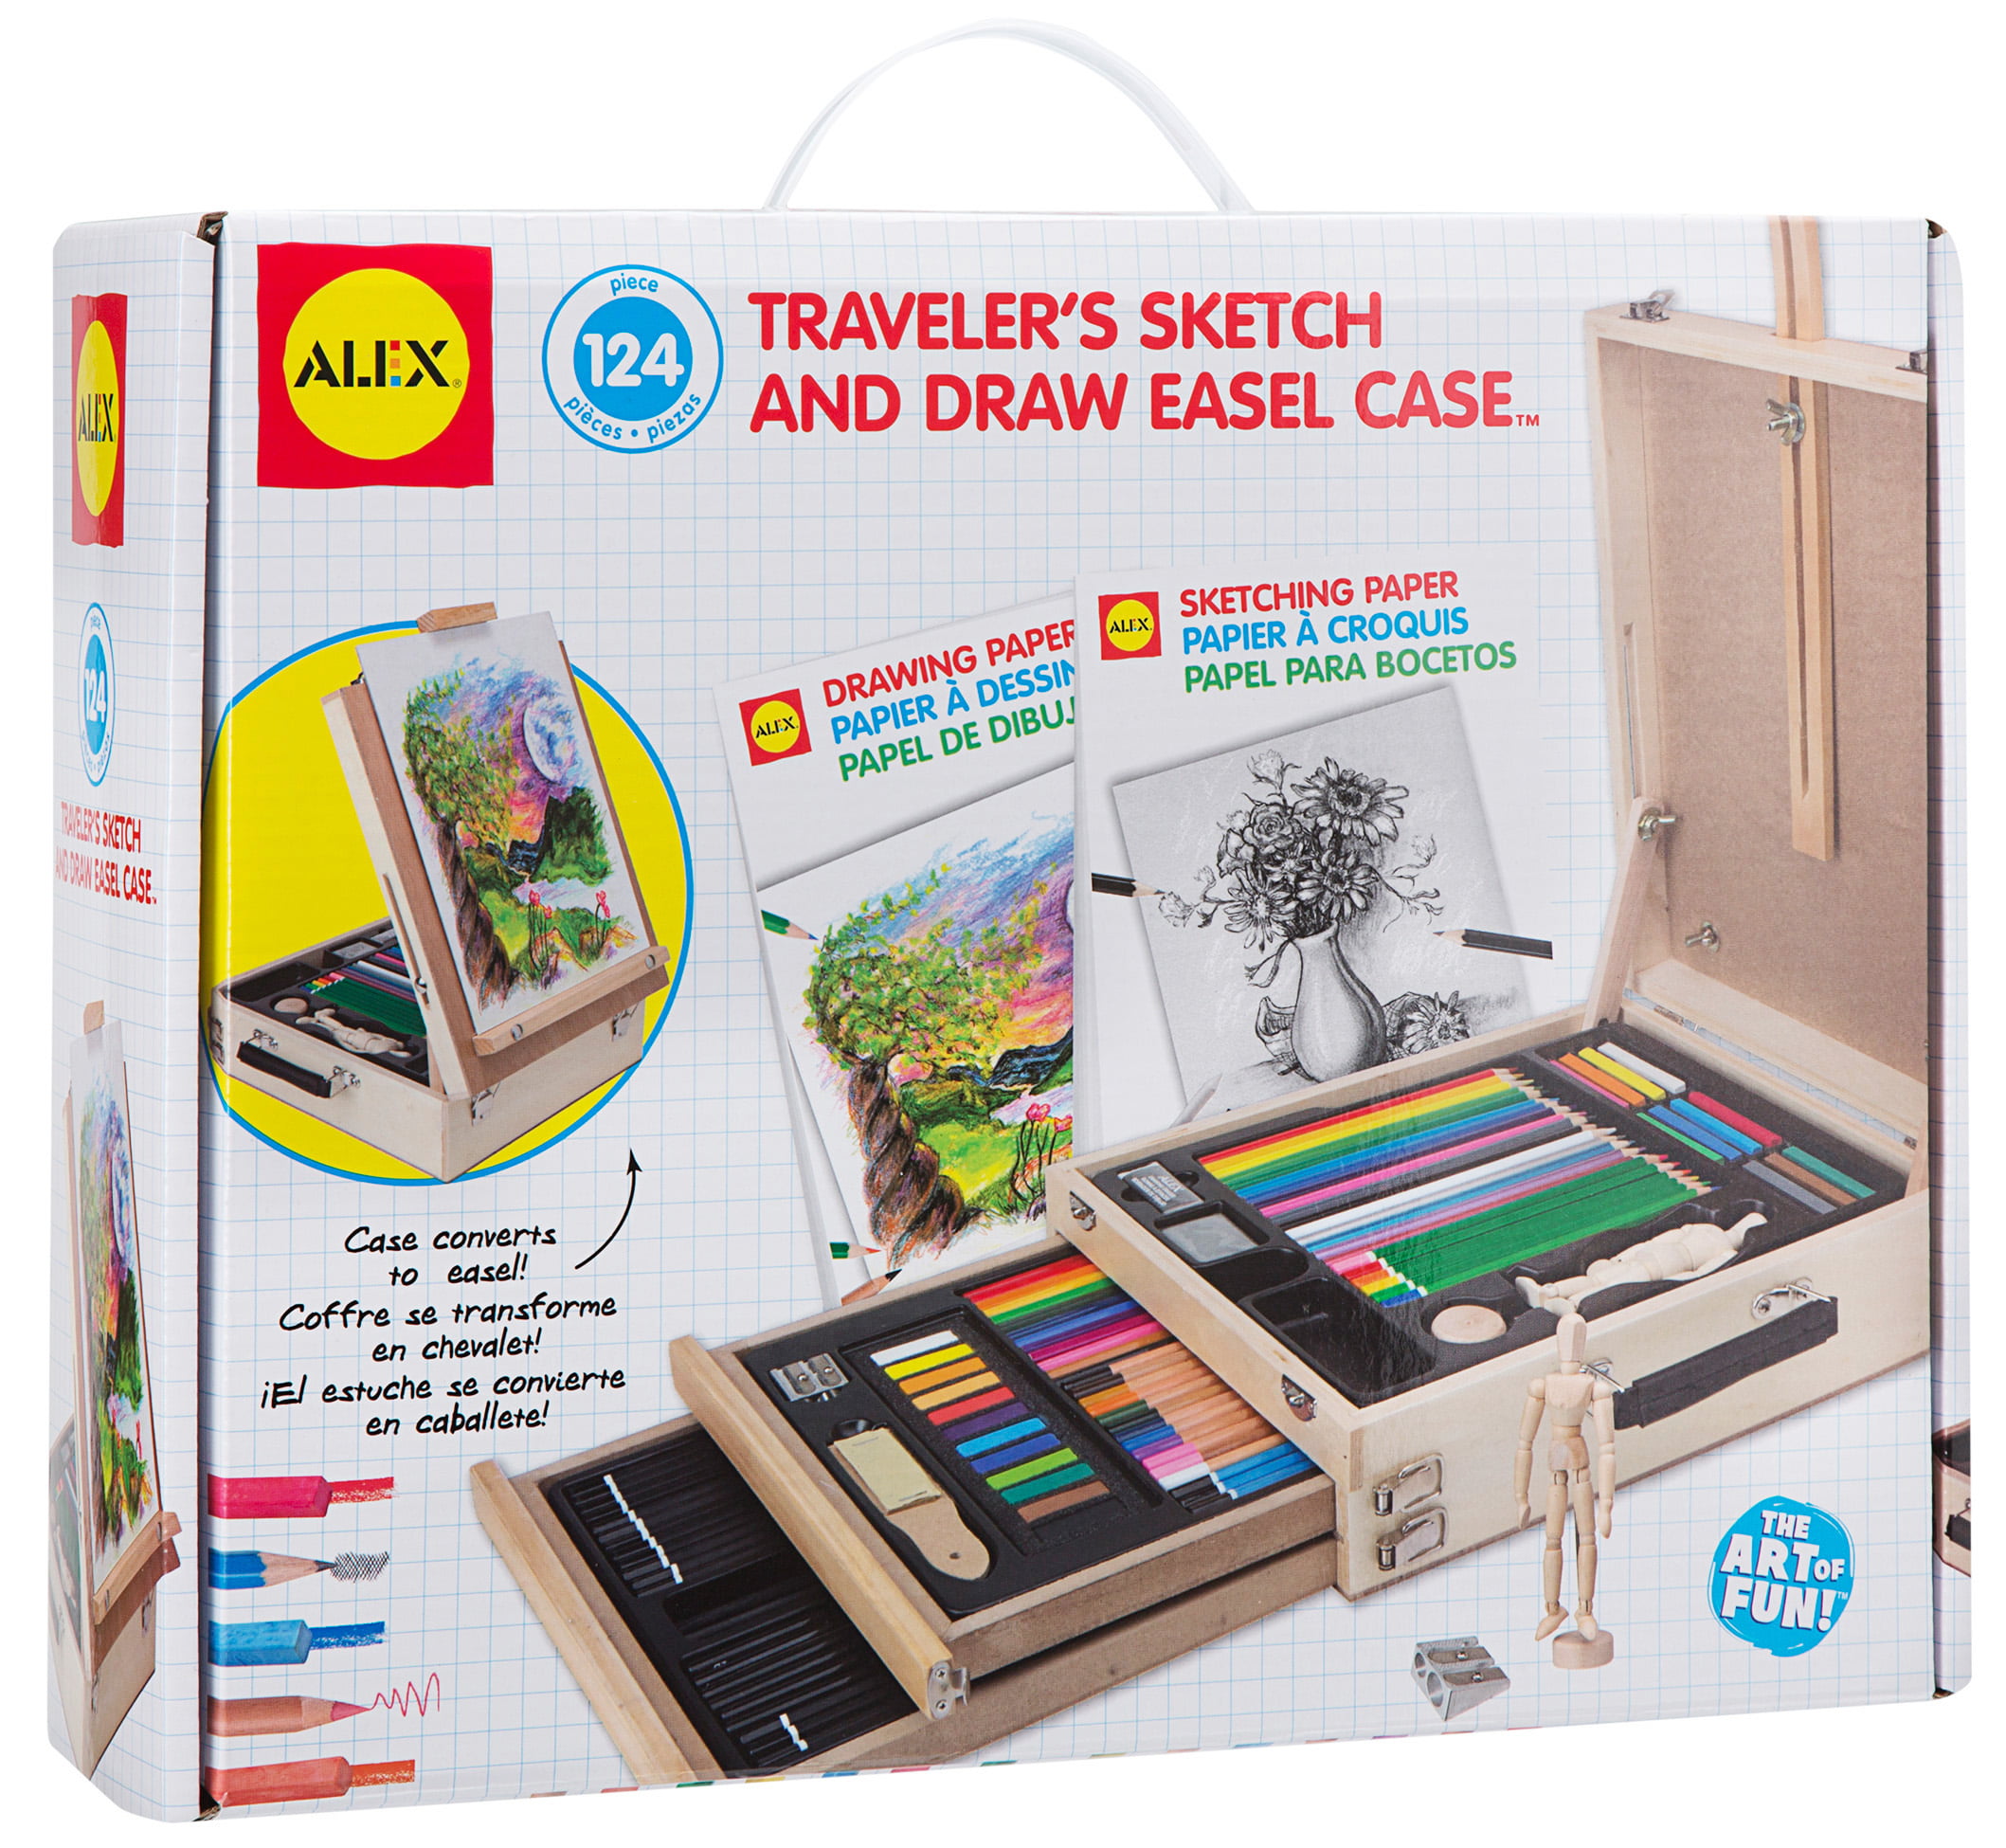 Studio Series Travel Sketch Kit (40 pieces) – Q.E.D. Astoria